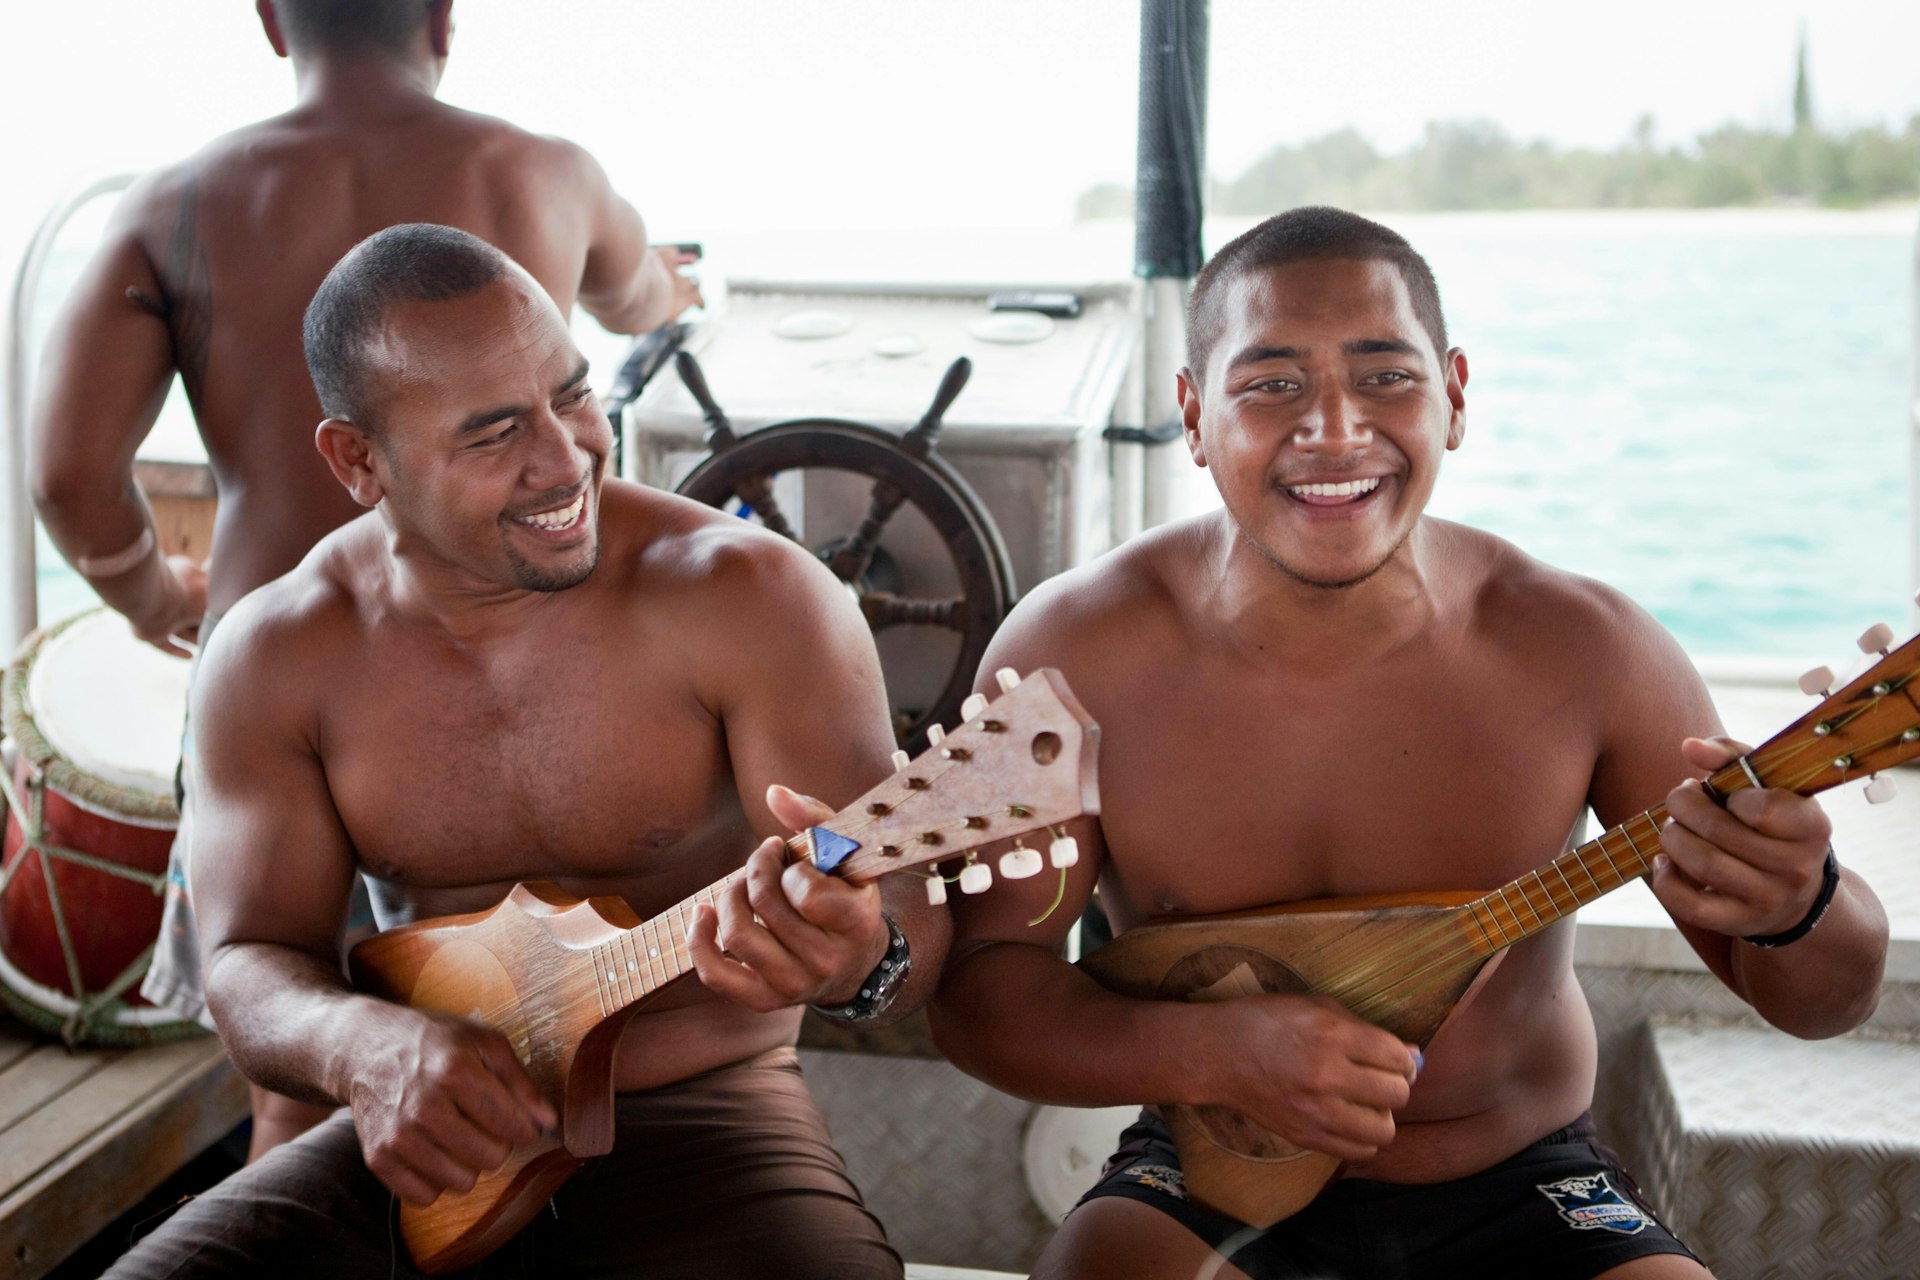 Guides playing ukuleles aboard a boat